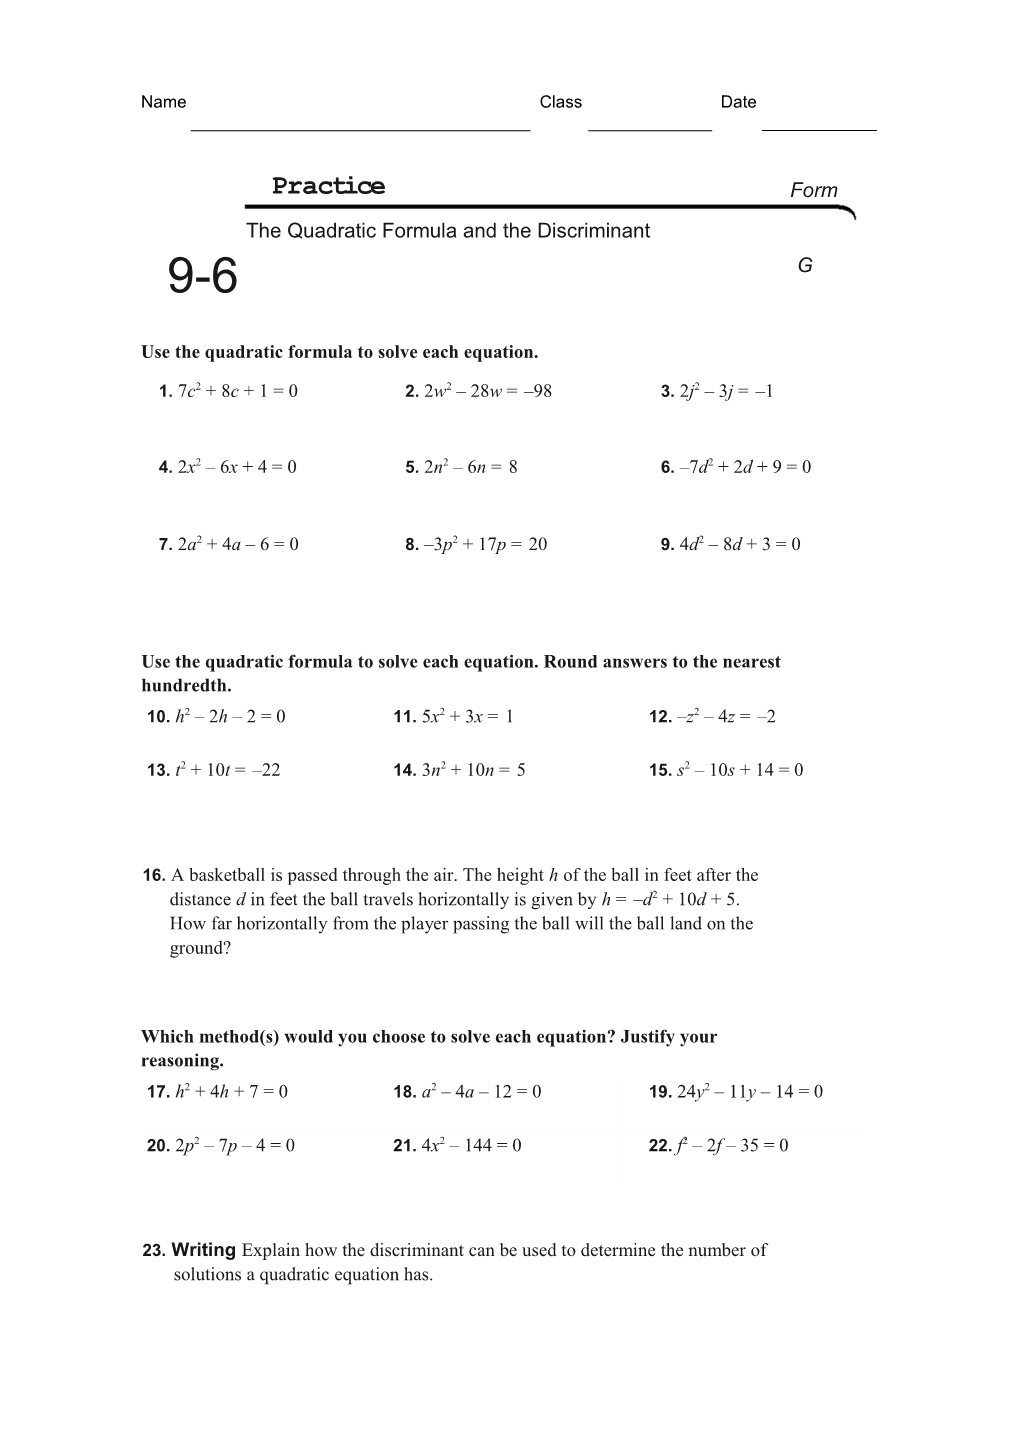 Use the Quadratic Formula to Solve Each Equation